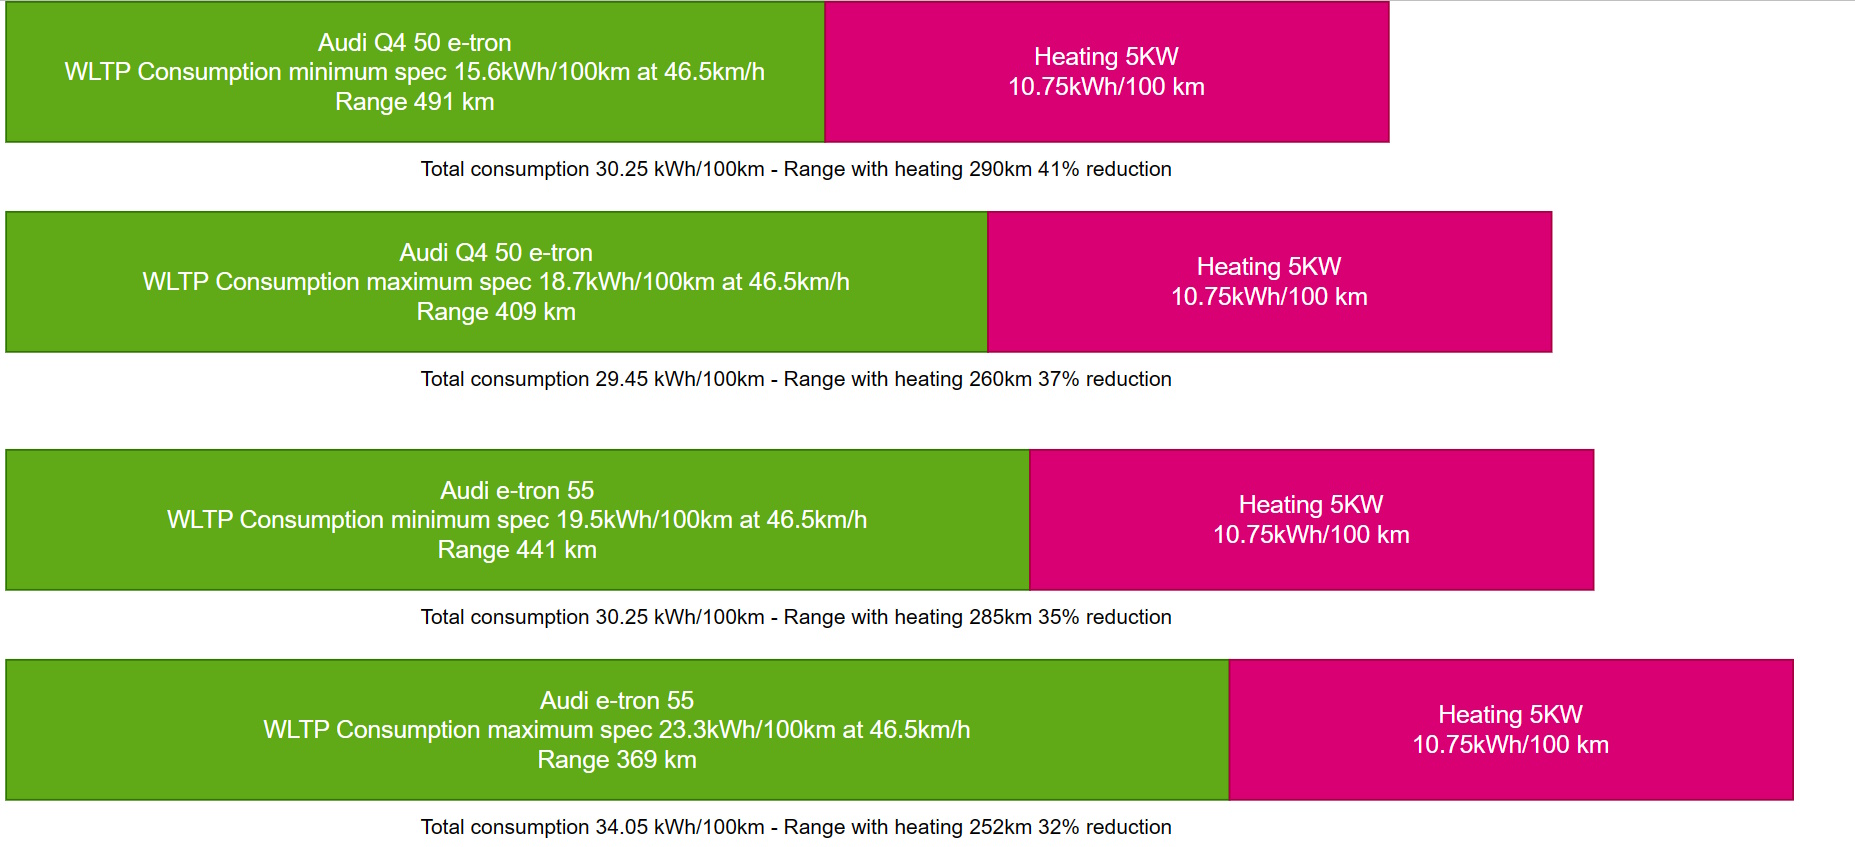 How 5KW heating affect range on Audi Q4 50 e-tron and Audi e-tron 55